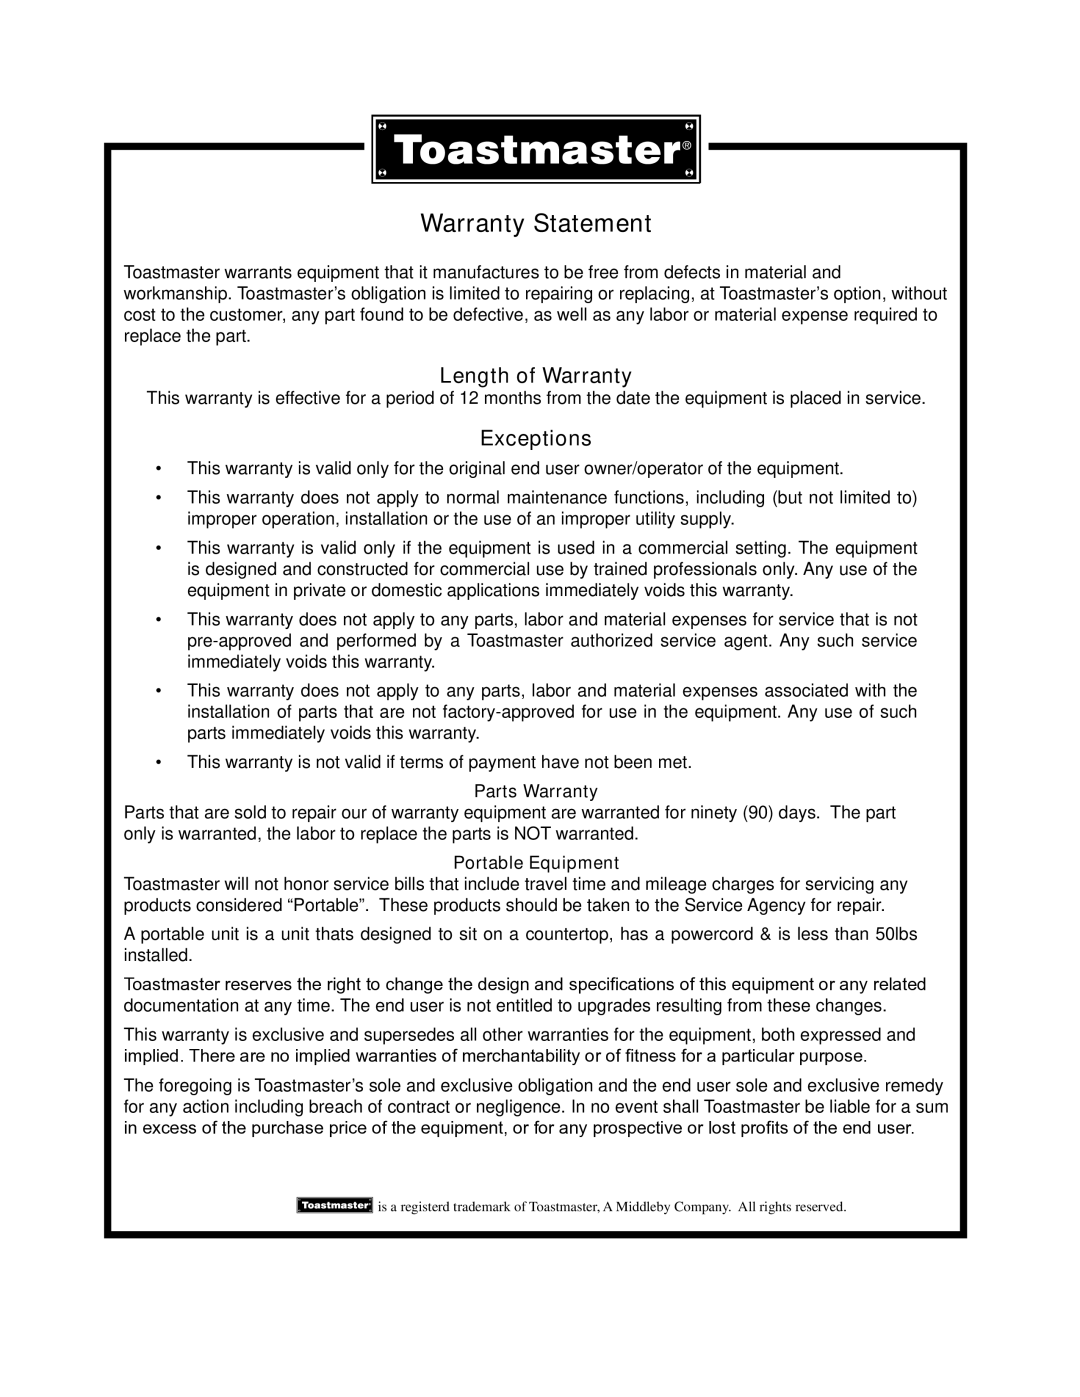 Toastmaster TMGE48, TMGE24, TMGE36 manual Warranty Statement 